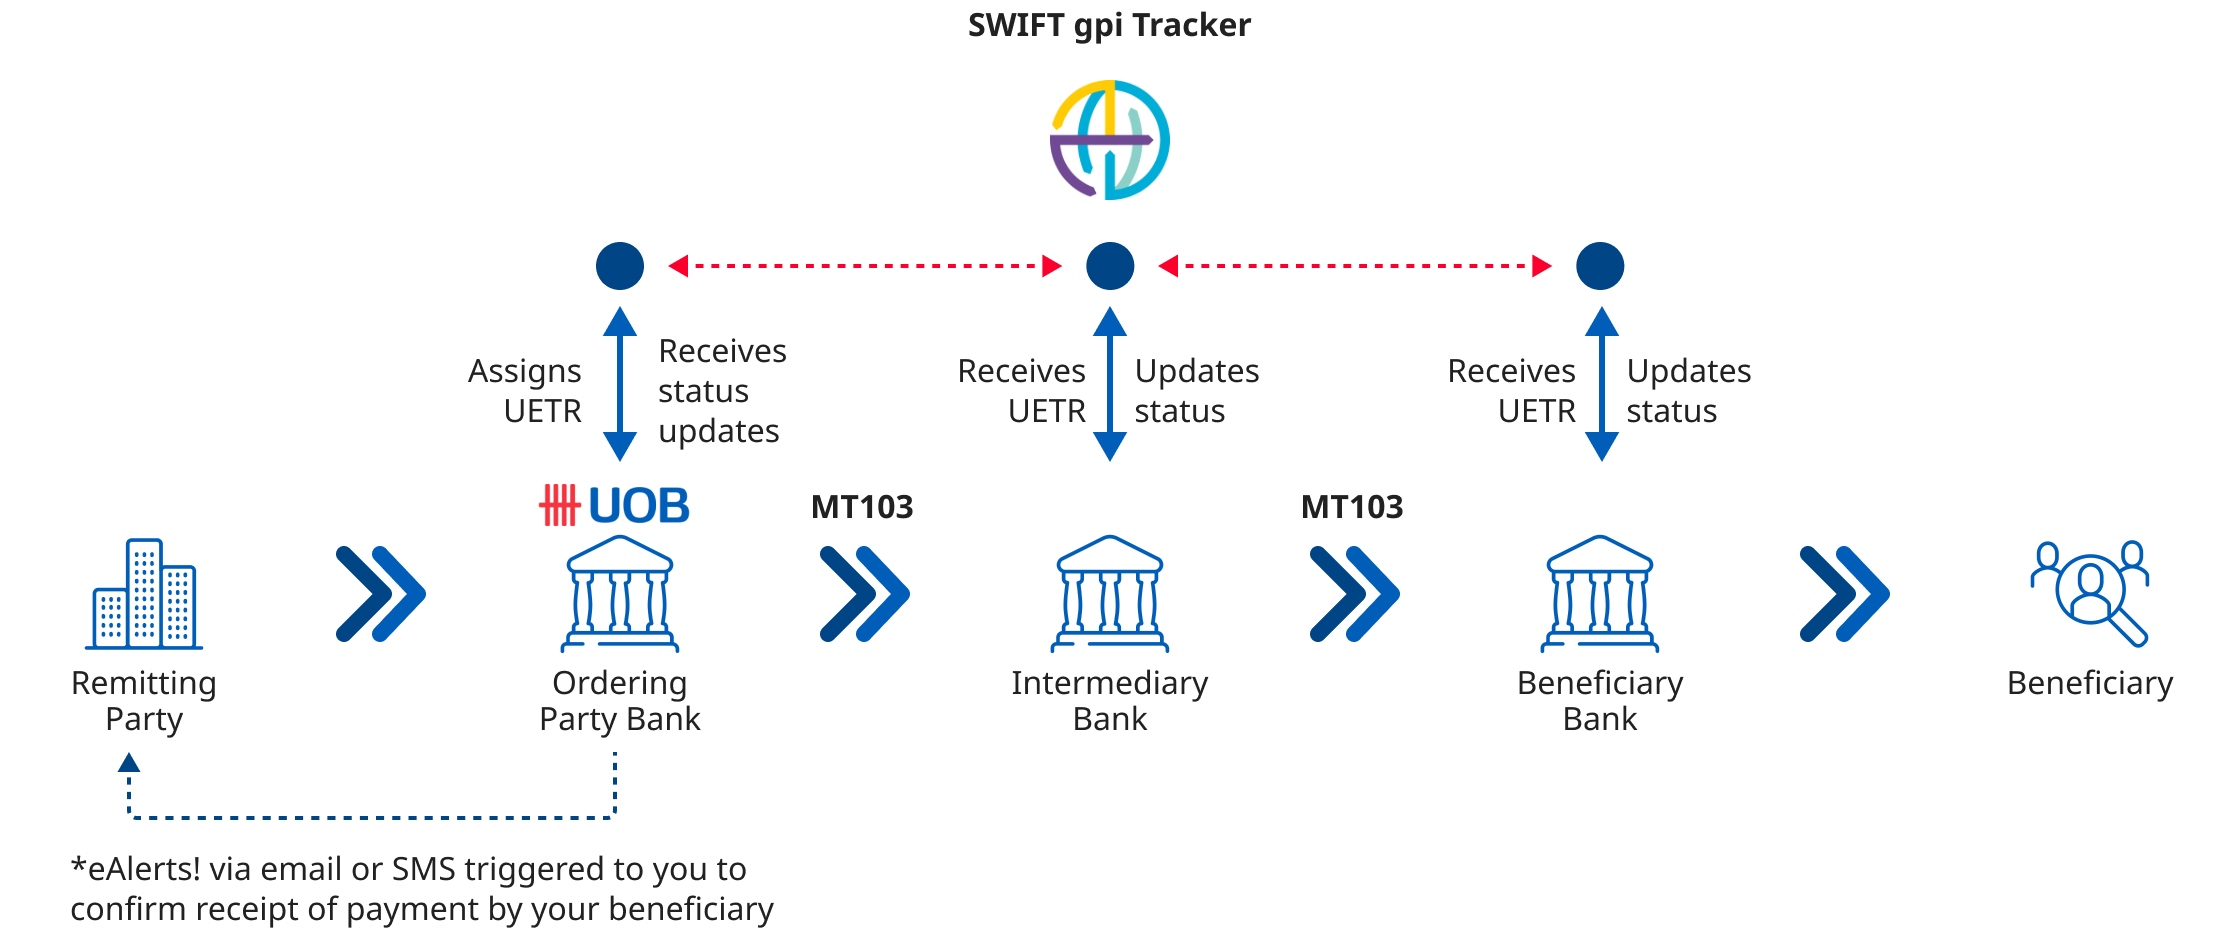 SWIFT gpi Tracker